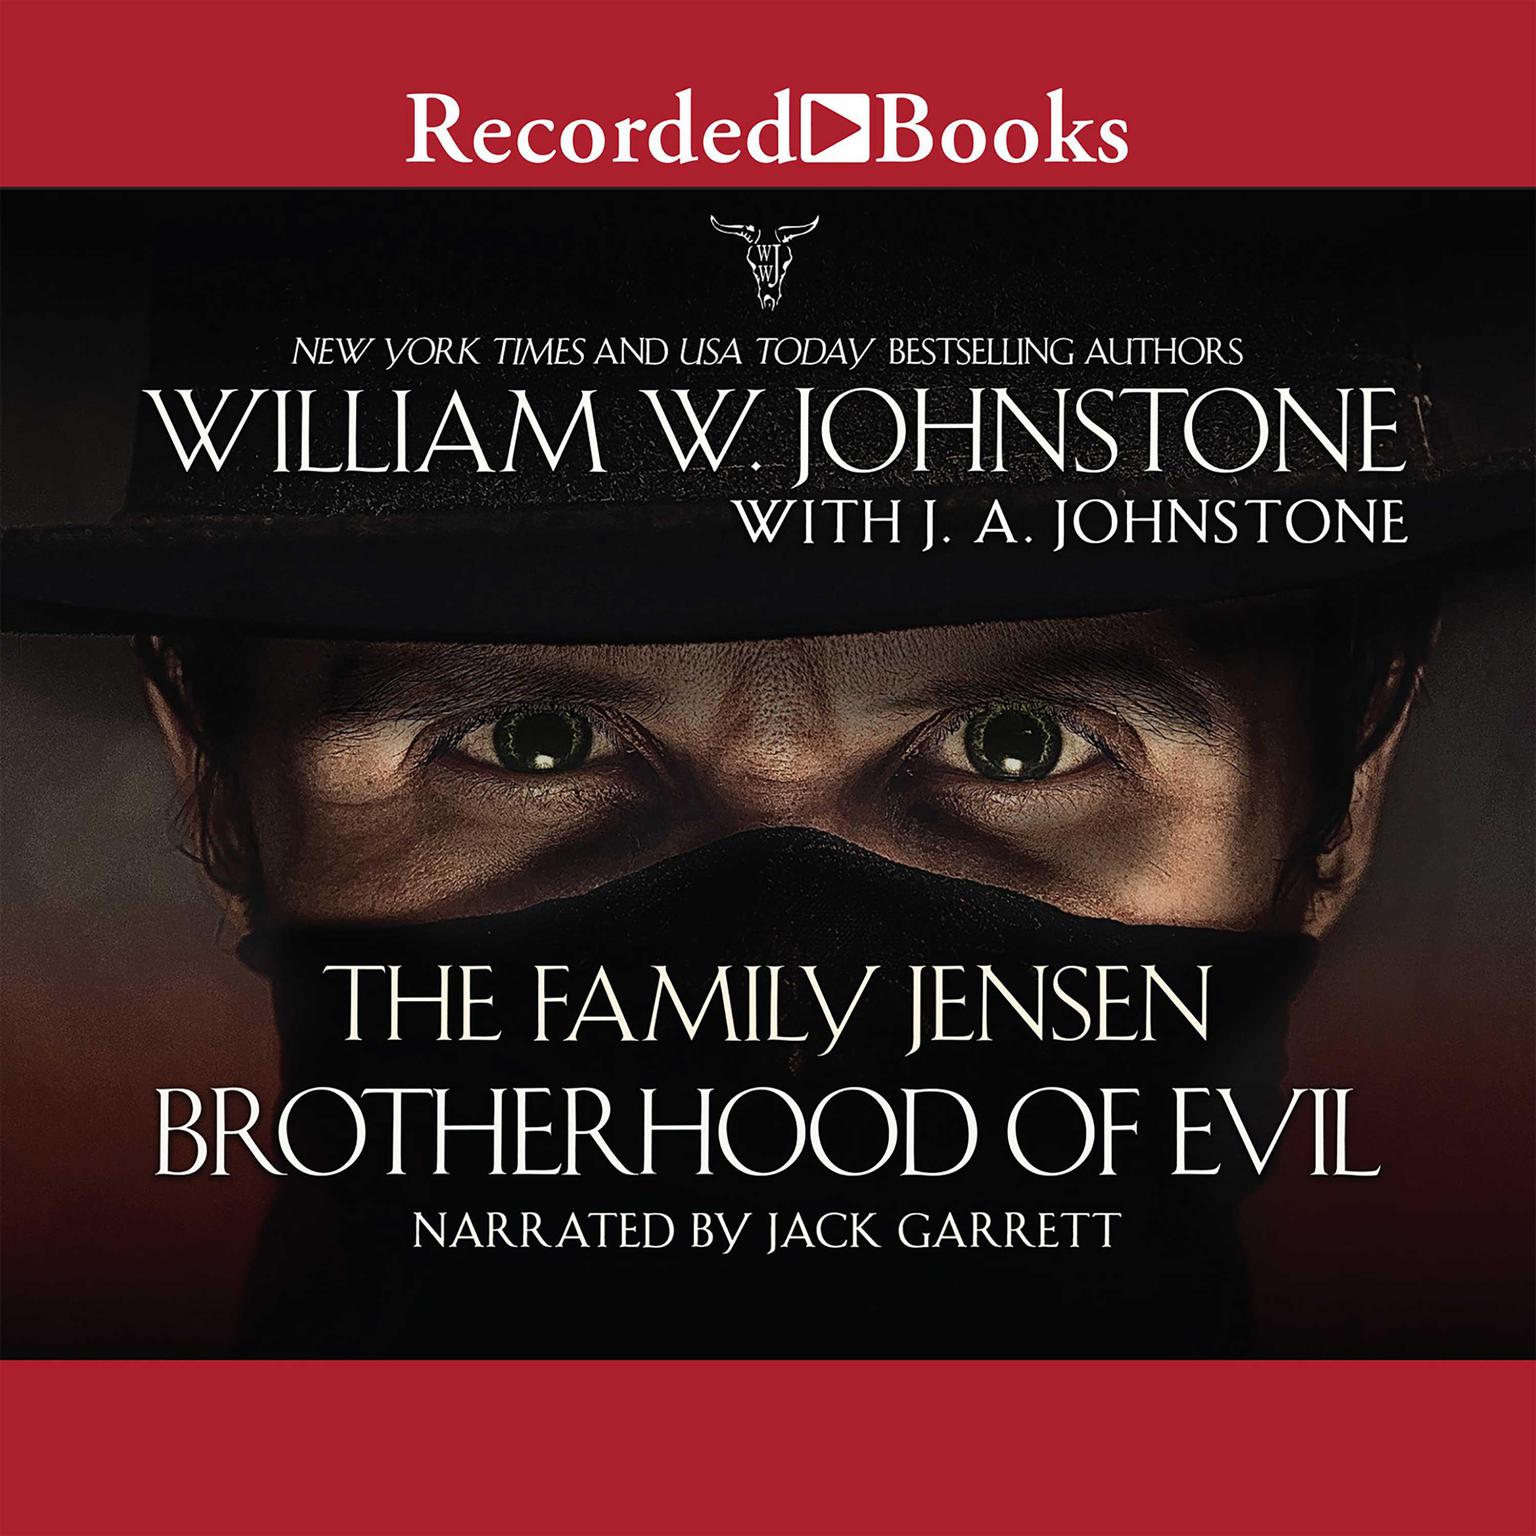 Brotherhood of Evil Audiobook, by William W. Johnstone